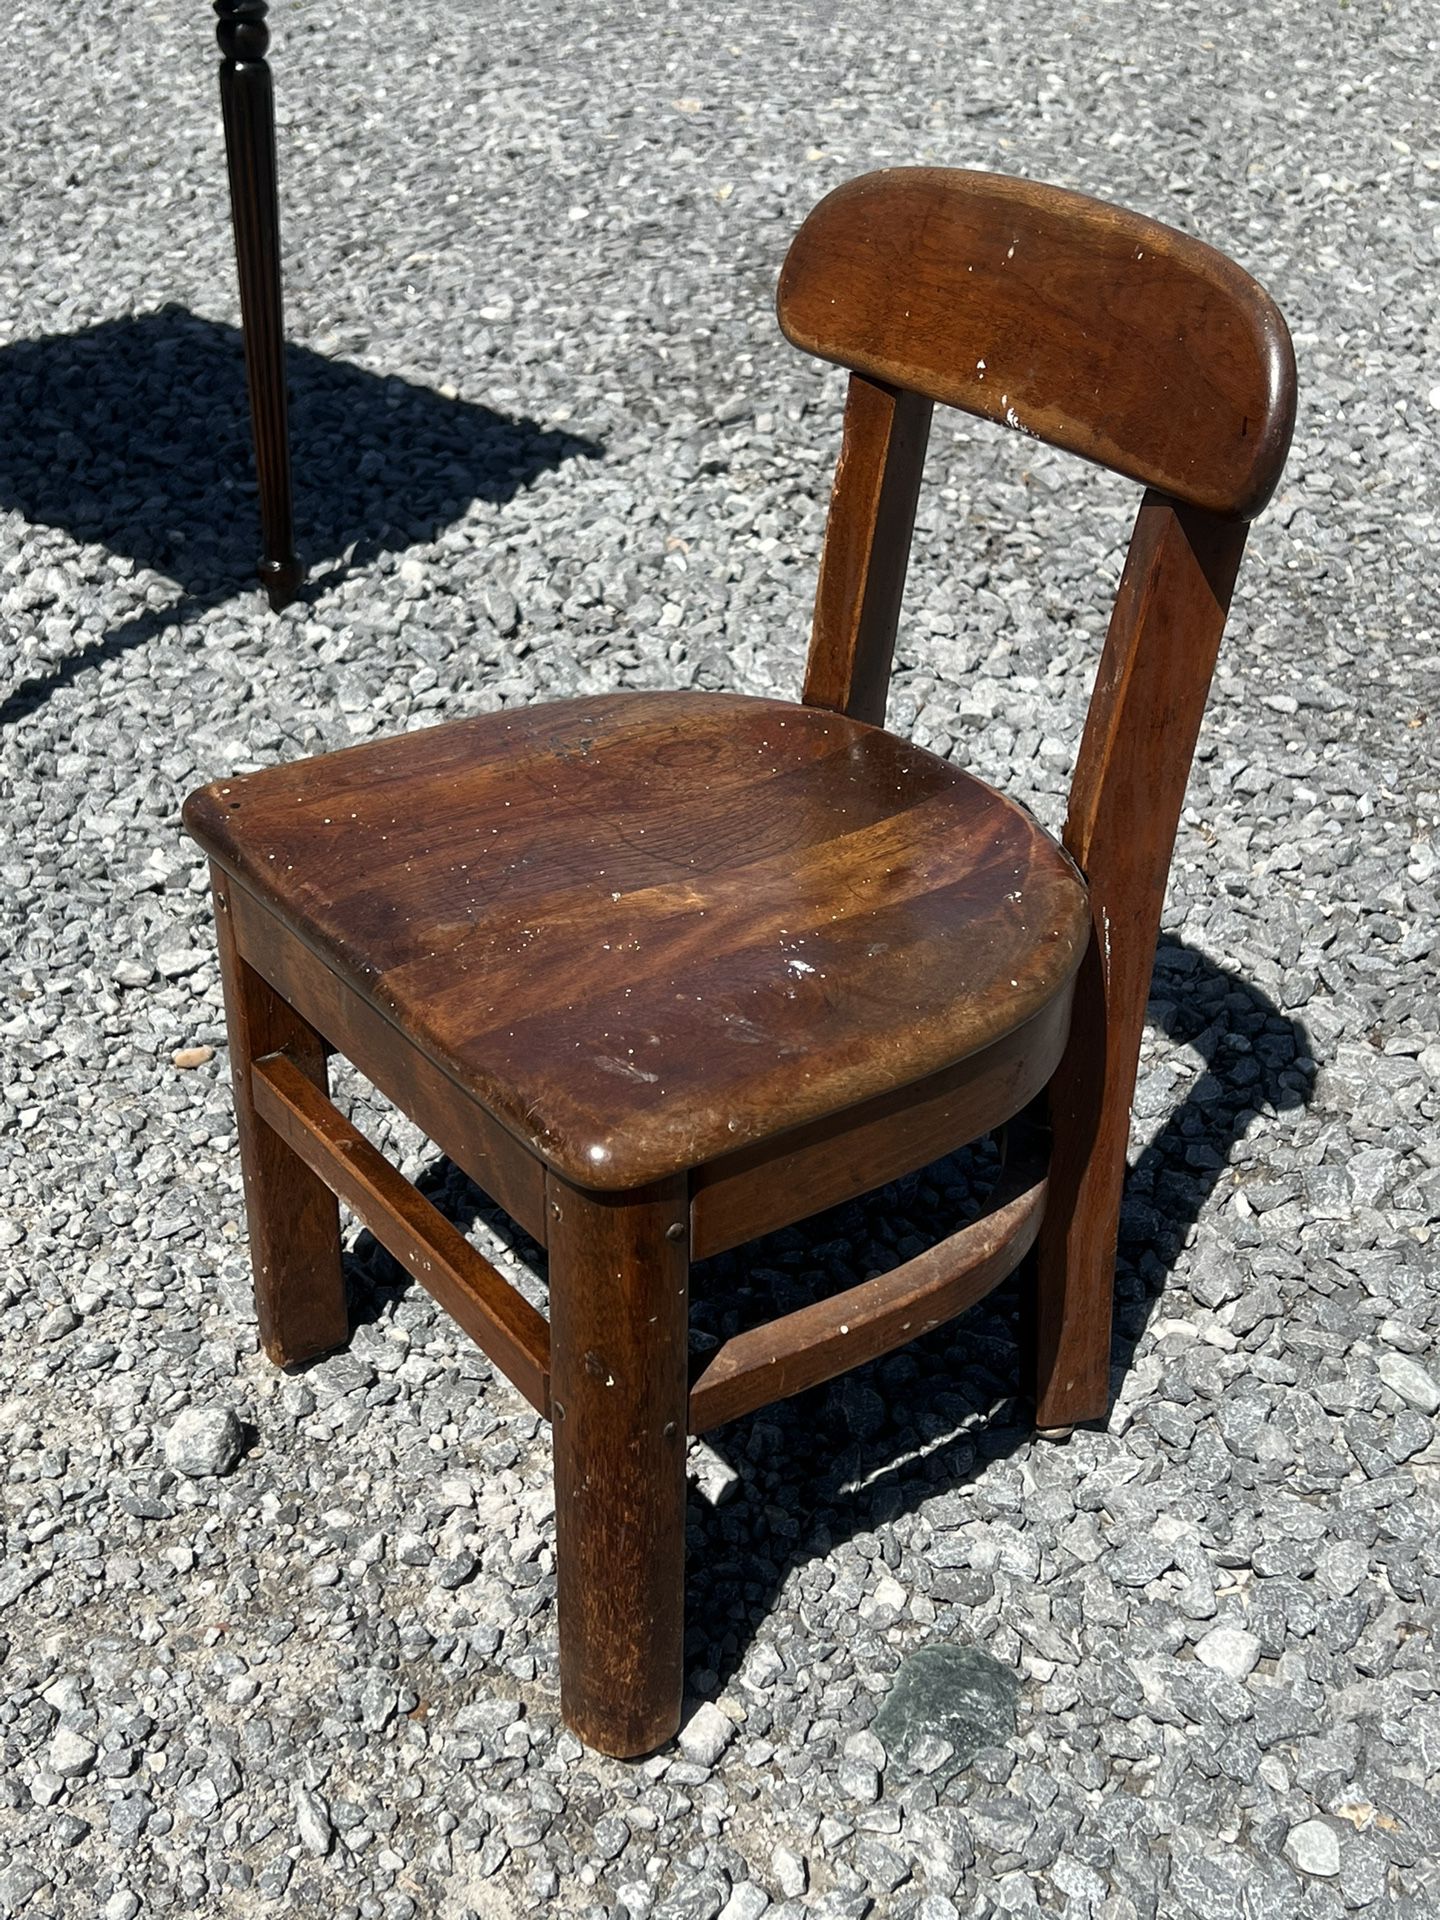 Vintage Heywood Wakefield Small Wooden Children’s Chair